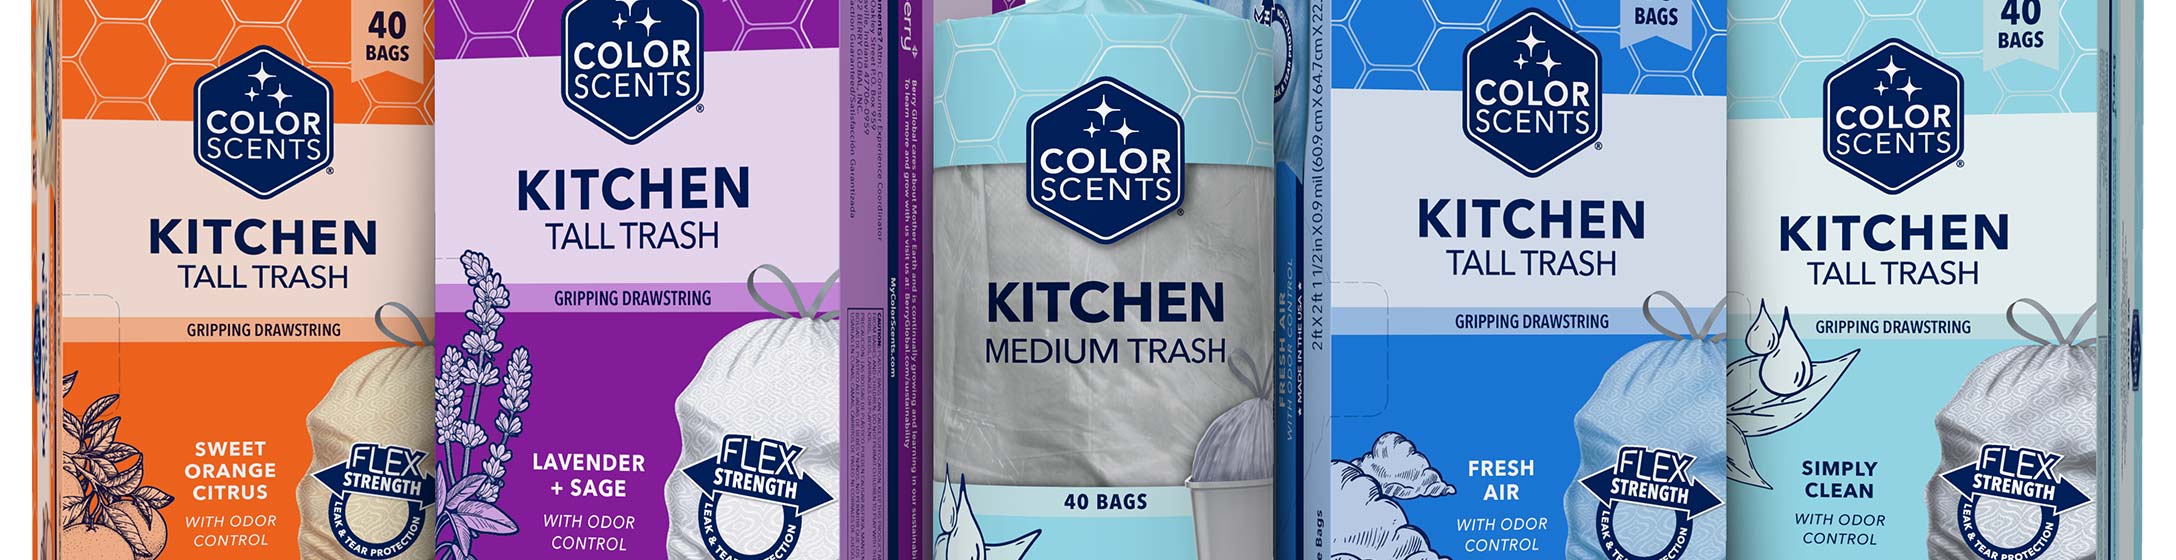 Color Scents Small Trash Bags, 4 Gallon, 80 Bags (Ocean Mist Scent, Twist Tie)